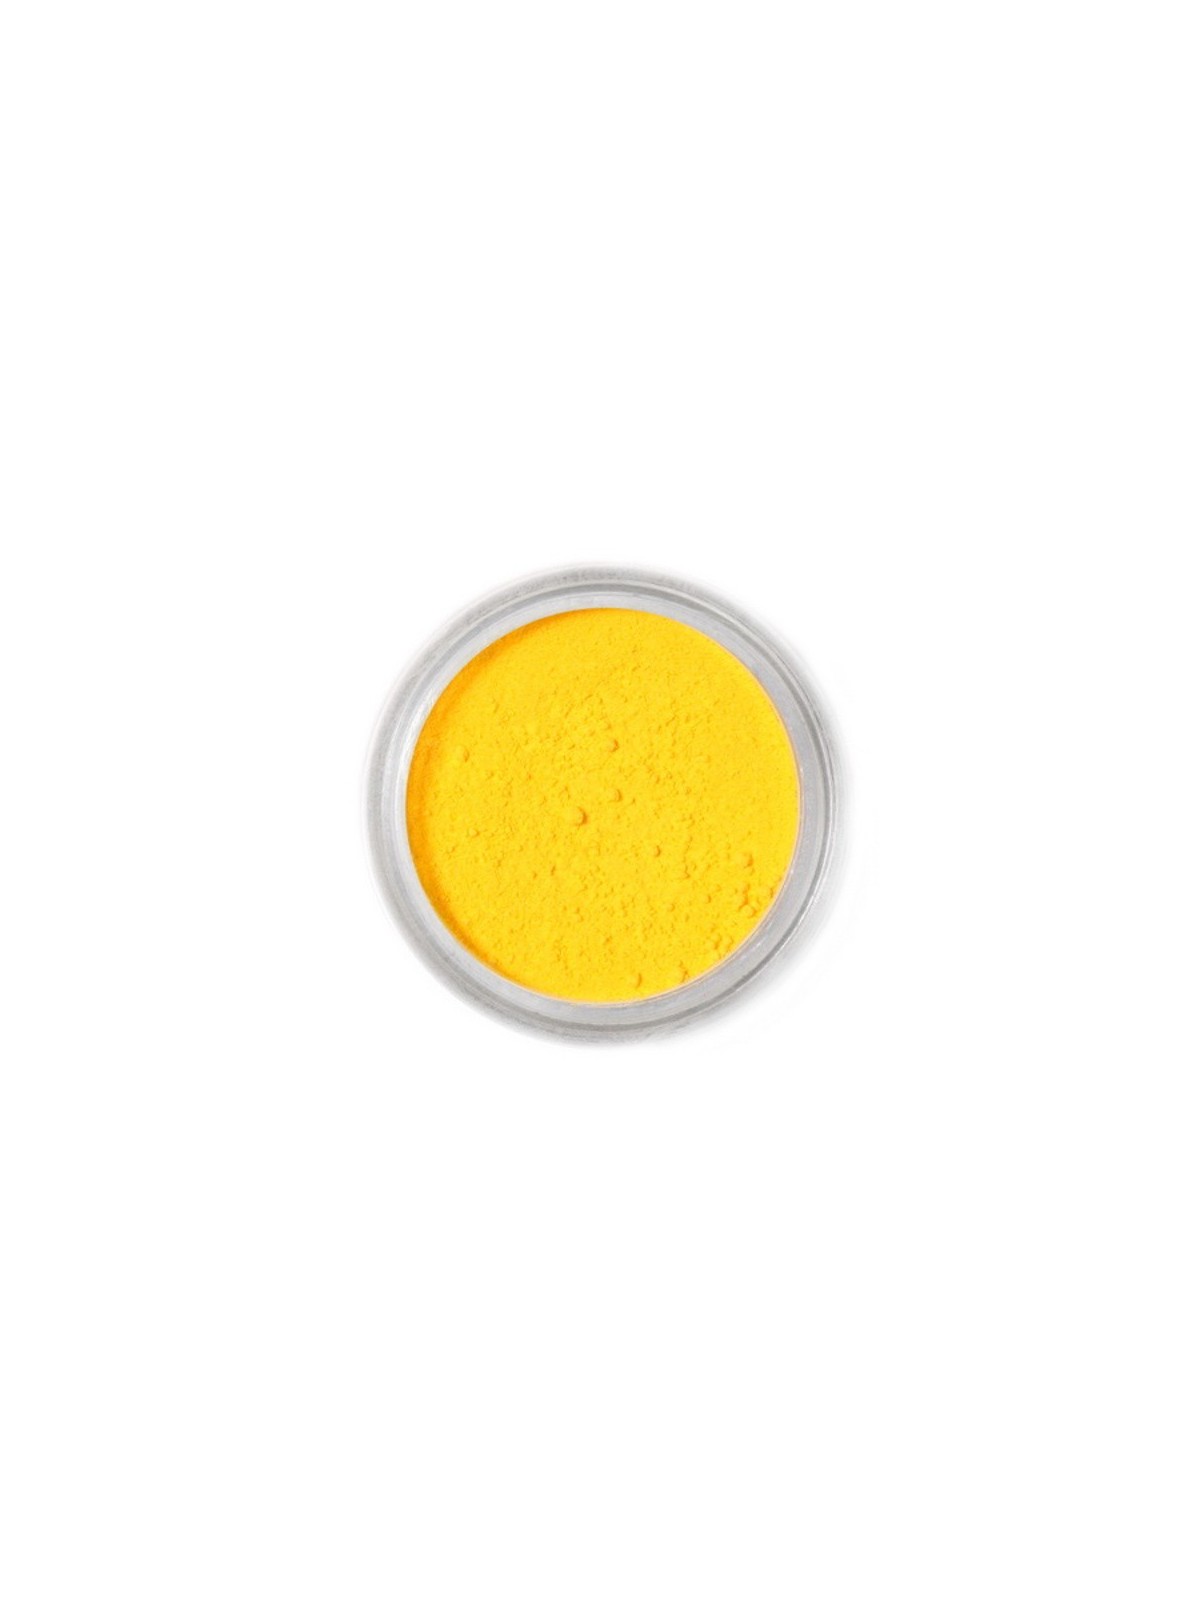 Essbaren Puderfarbe Fractal - Canary Yellow, Kanar sárga (2,5 g)